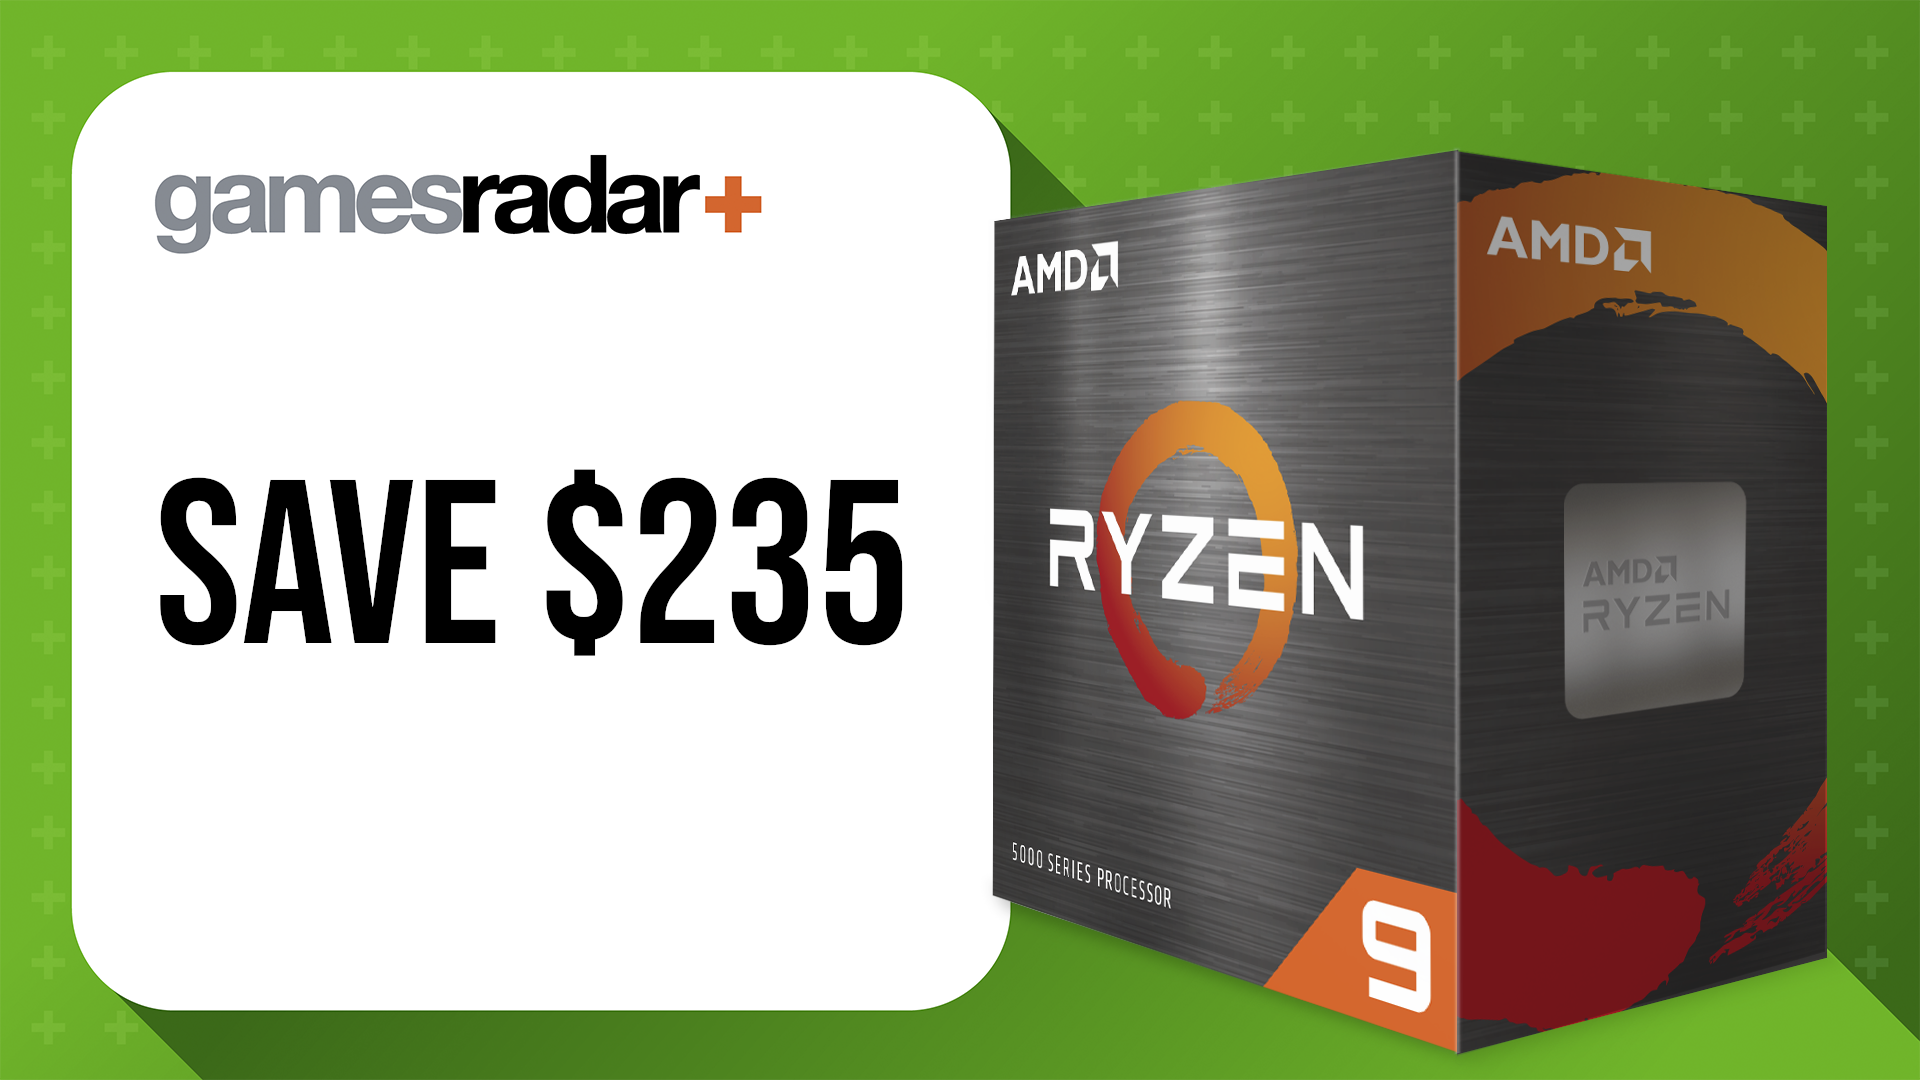 AMD Ryzen 9 deal